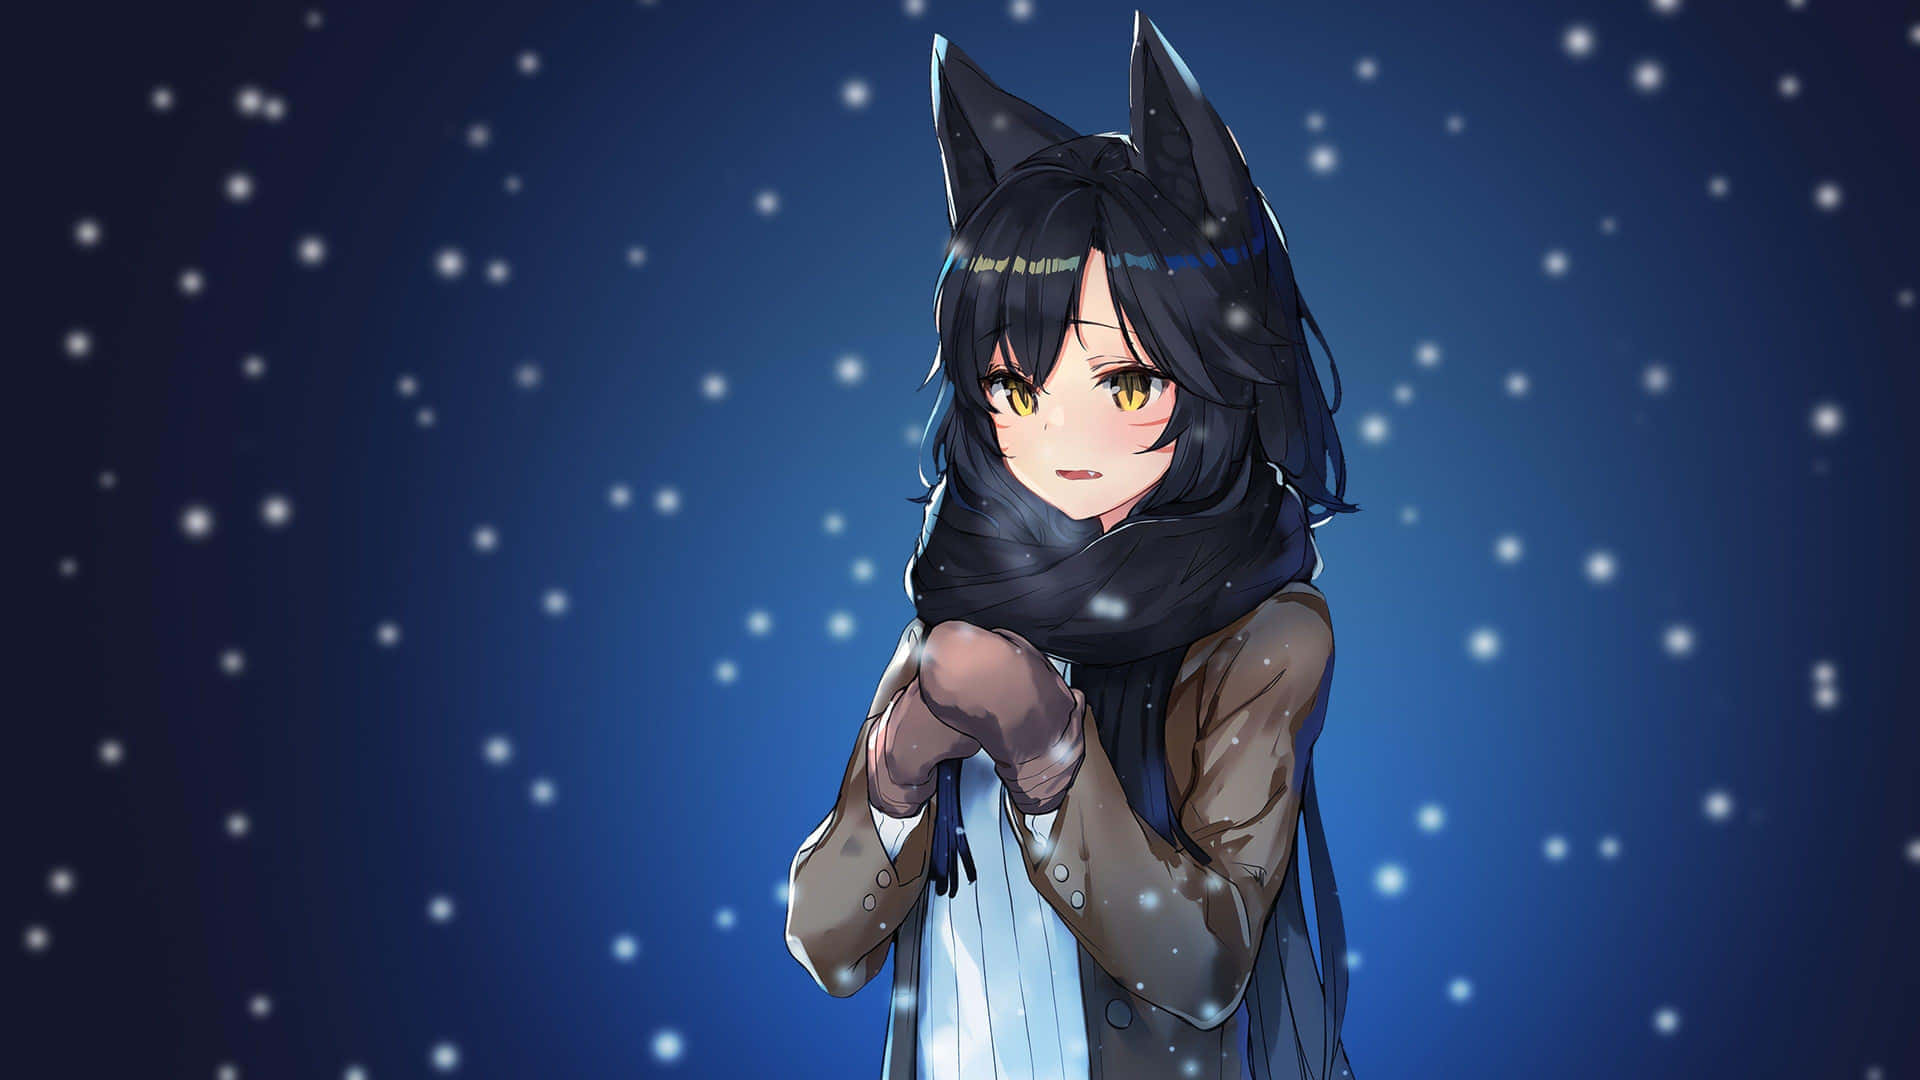 Winter_ Night_ Anime_ Wolf_ Girl.jpg Wallpaper